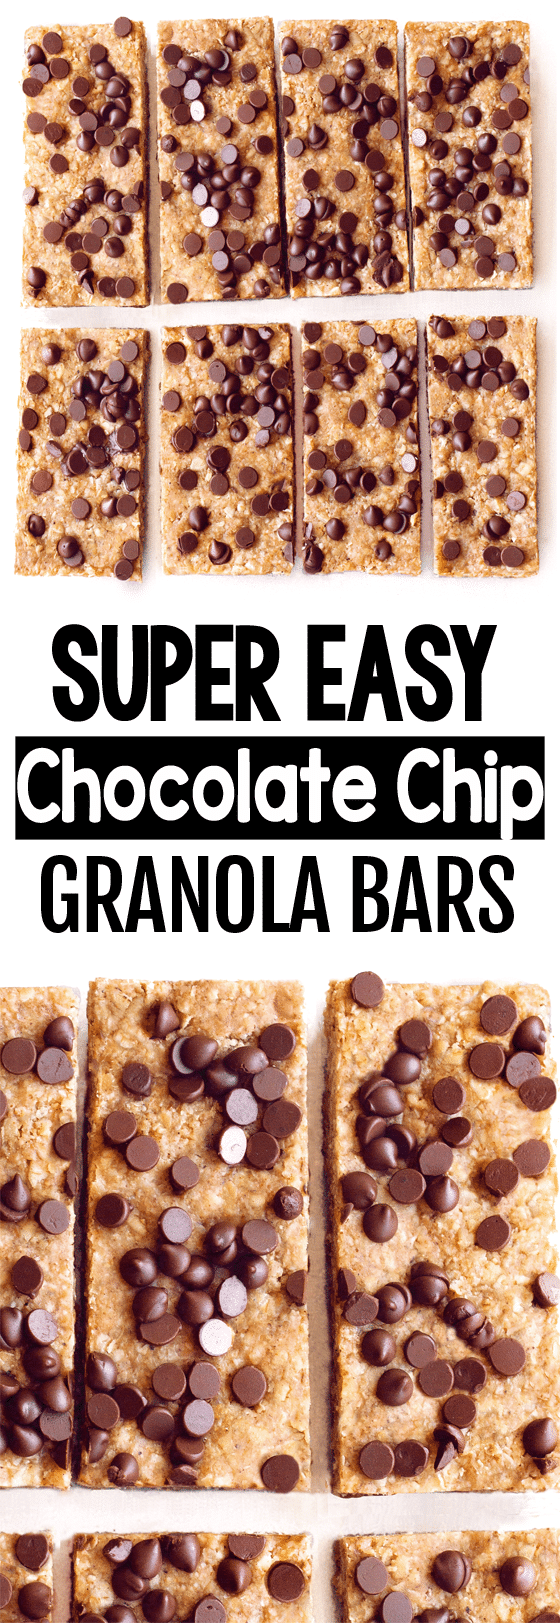 Homemade healthy granola bar recipe